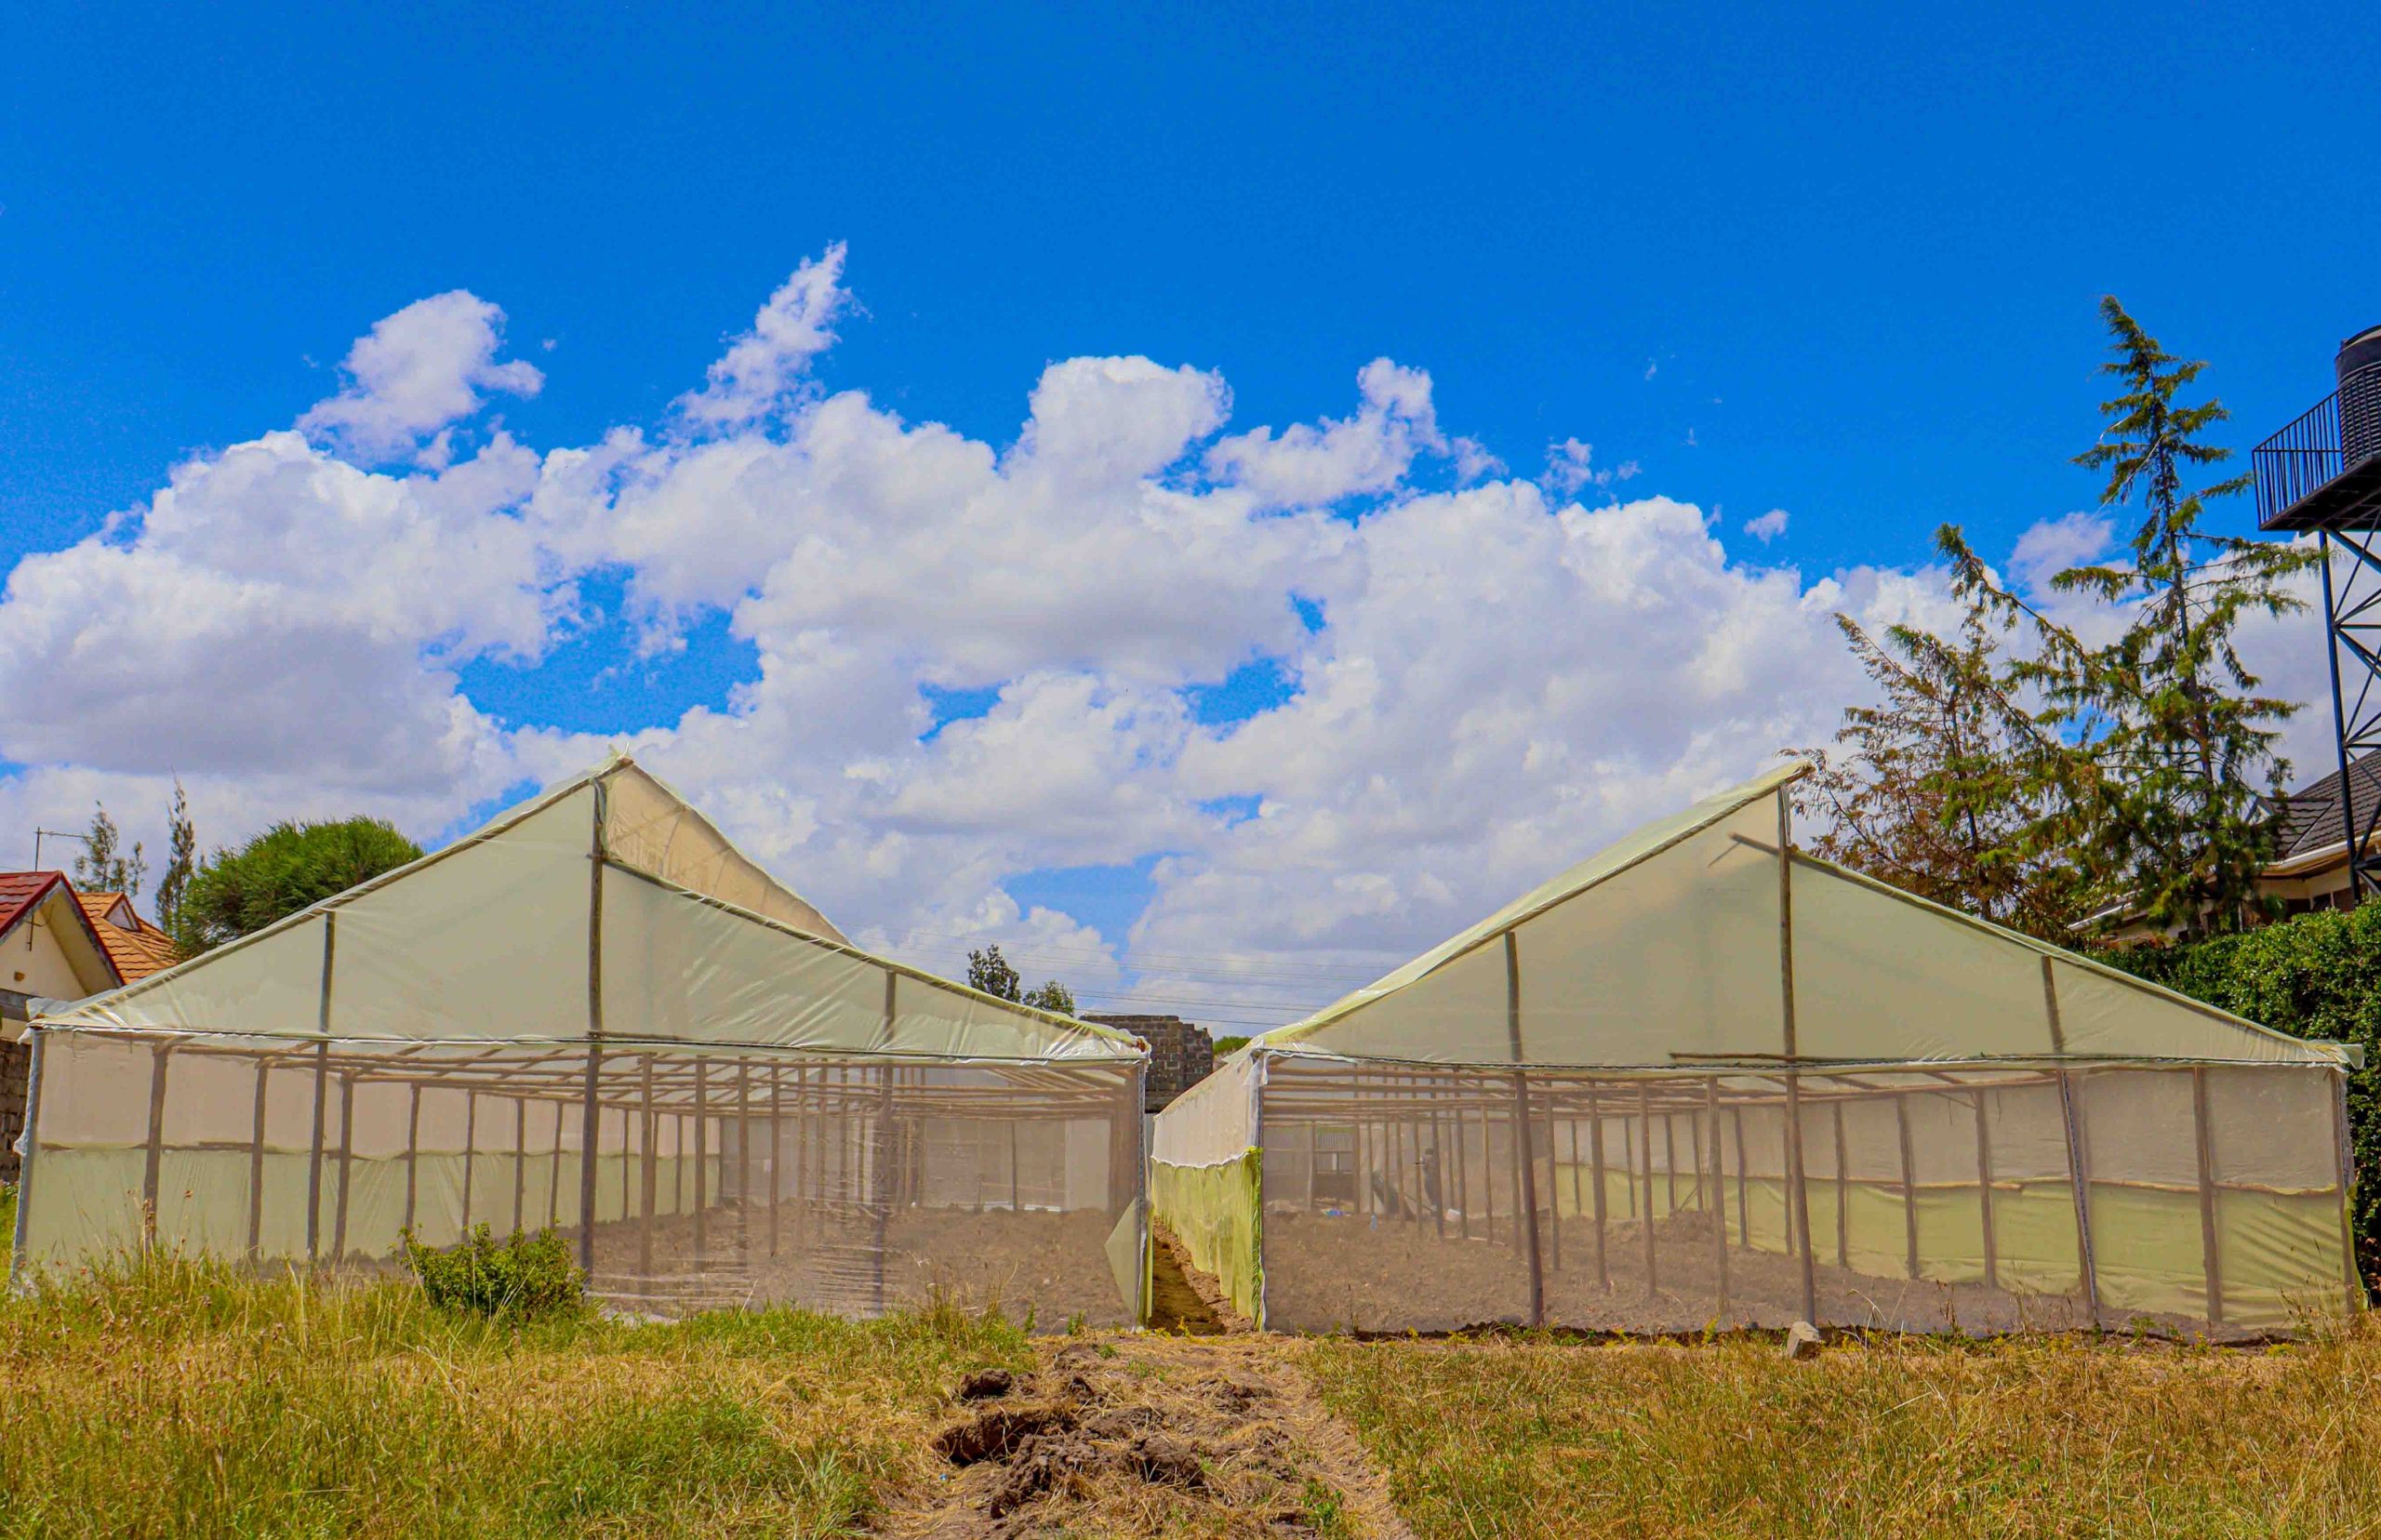 Wooden Greenhouses in Kenya